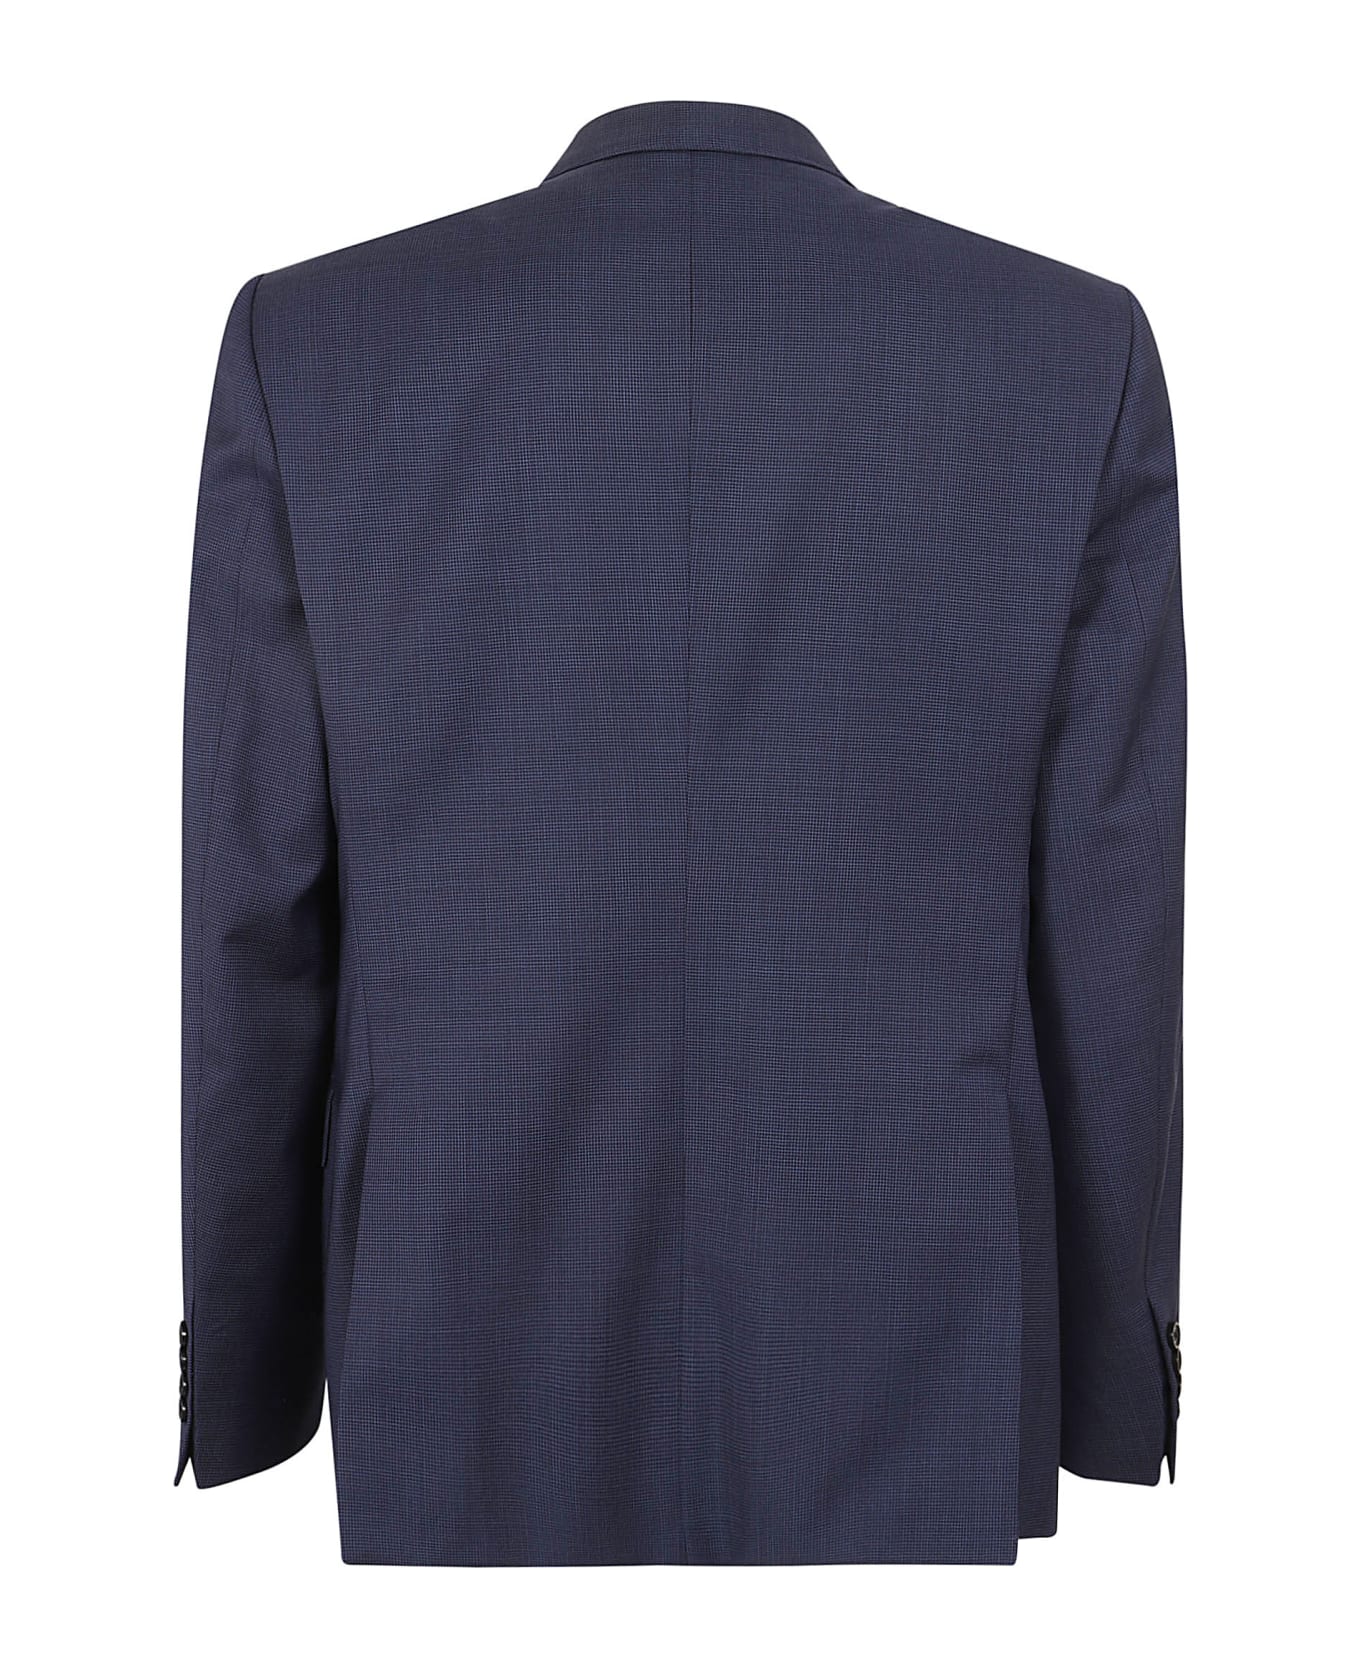 Emporio Armani Suit スーツ